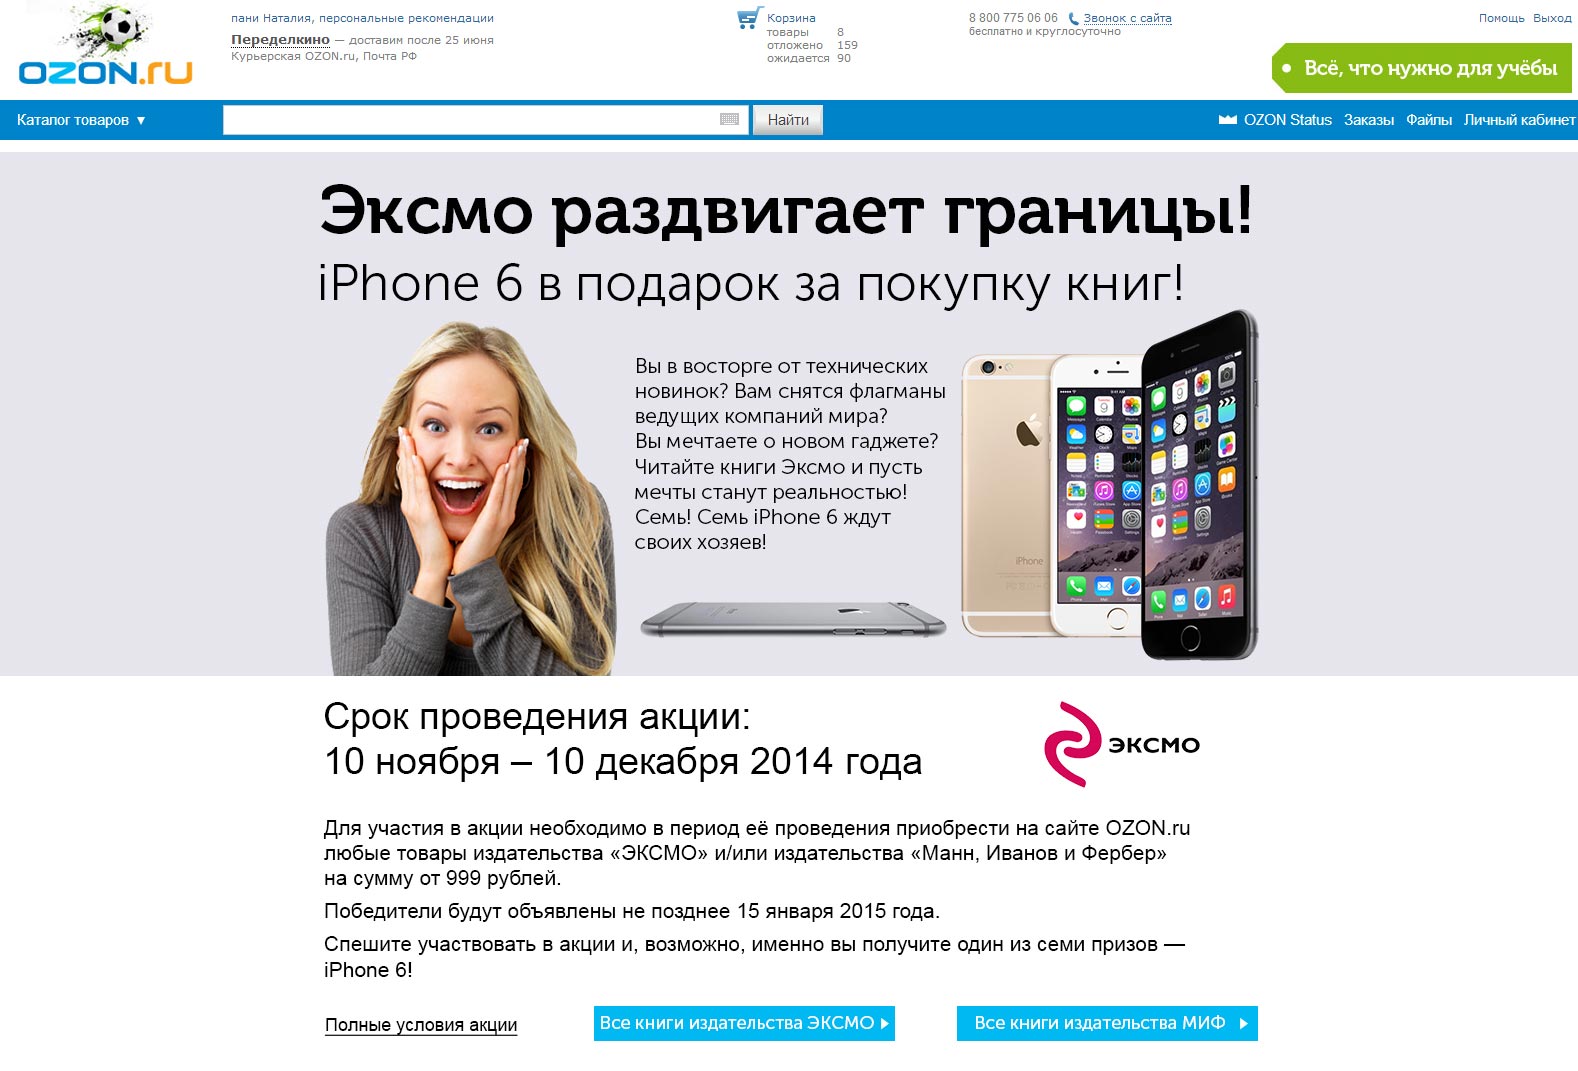 Промостраница акции для Ozon.ru